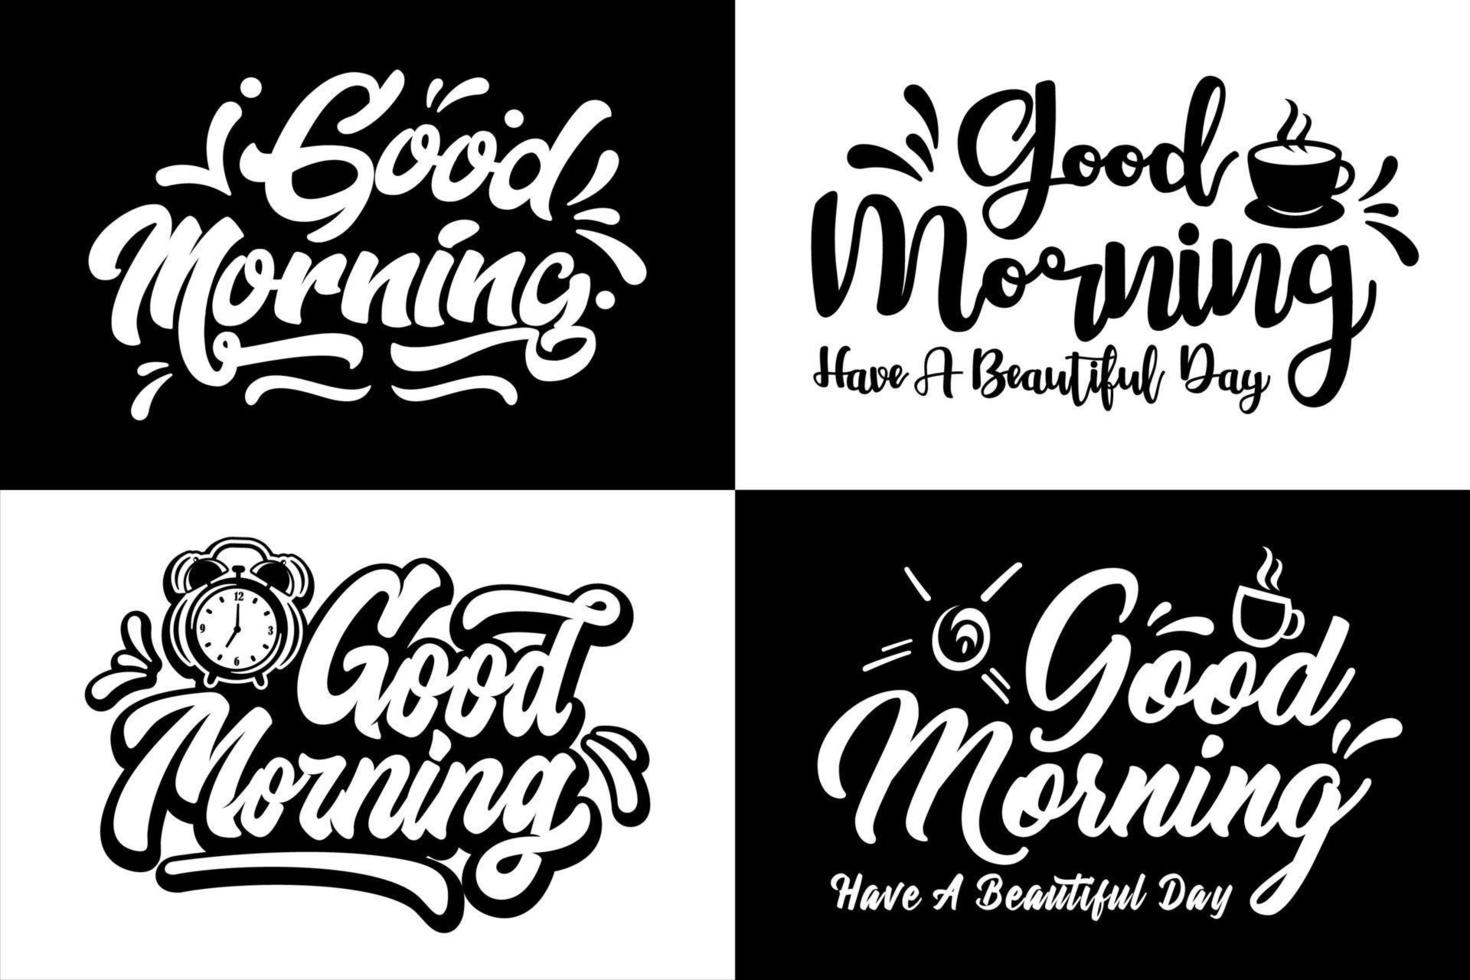 God Morning lettering vector design